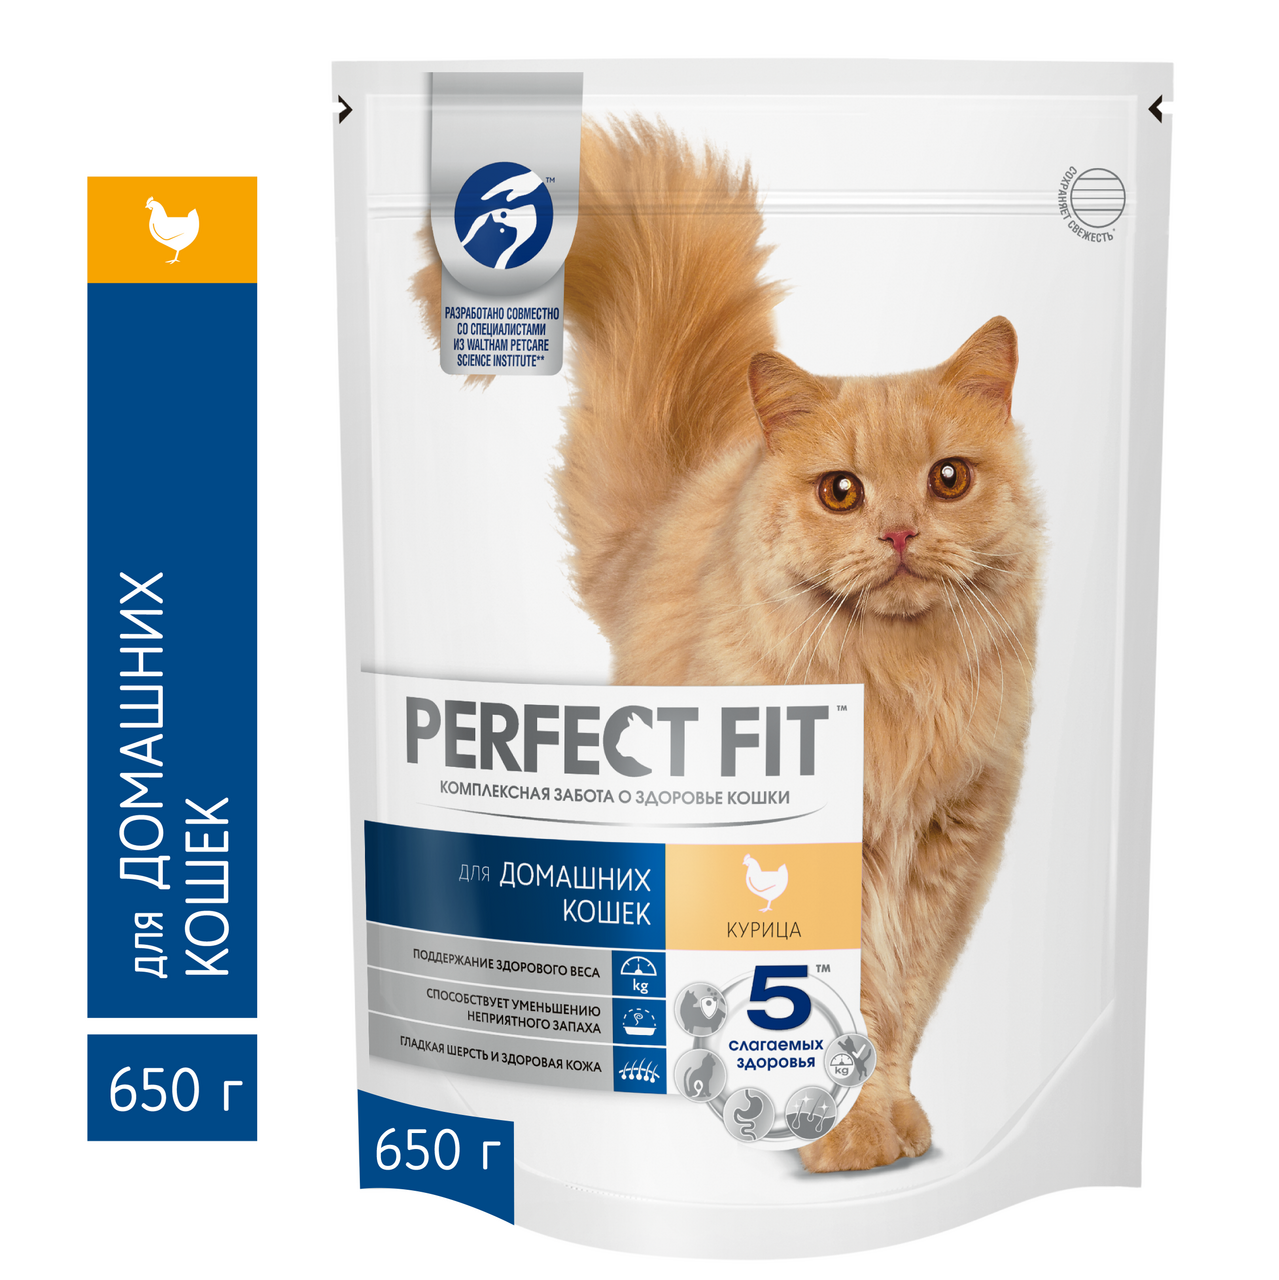 Полнорационный сухой корм для взрослых кошек Perfect Fit In-Home с курицей 650 грамм